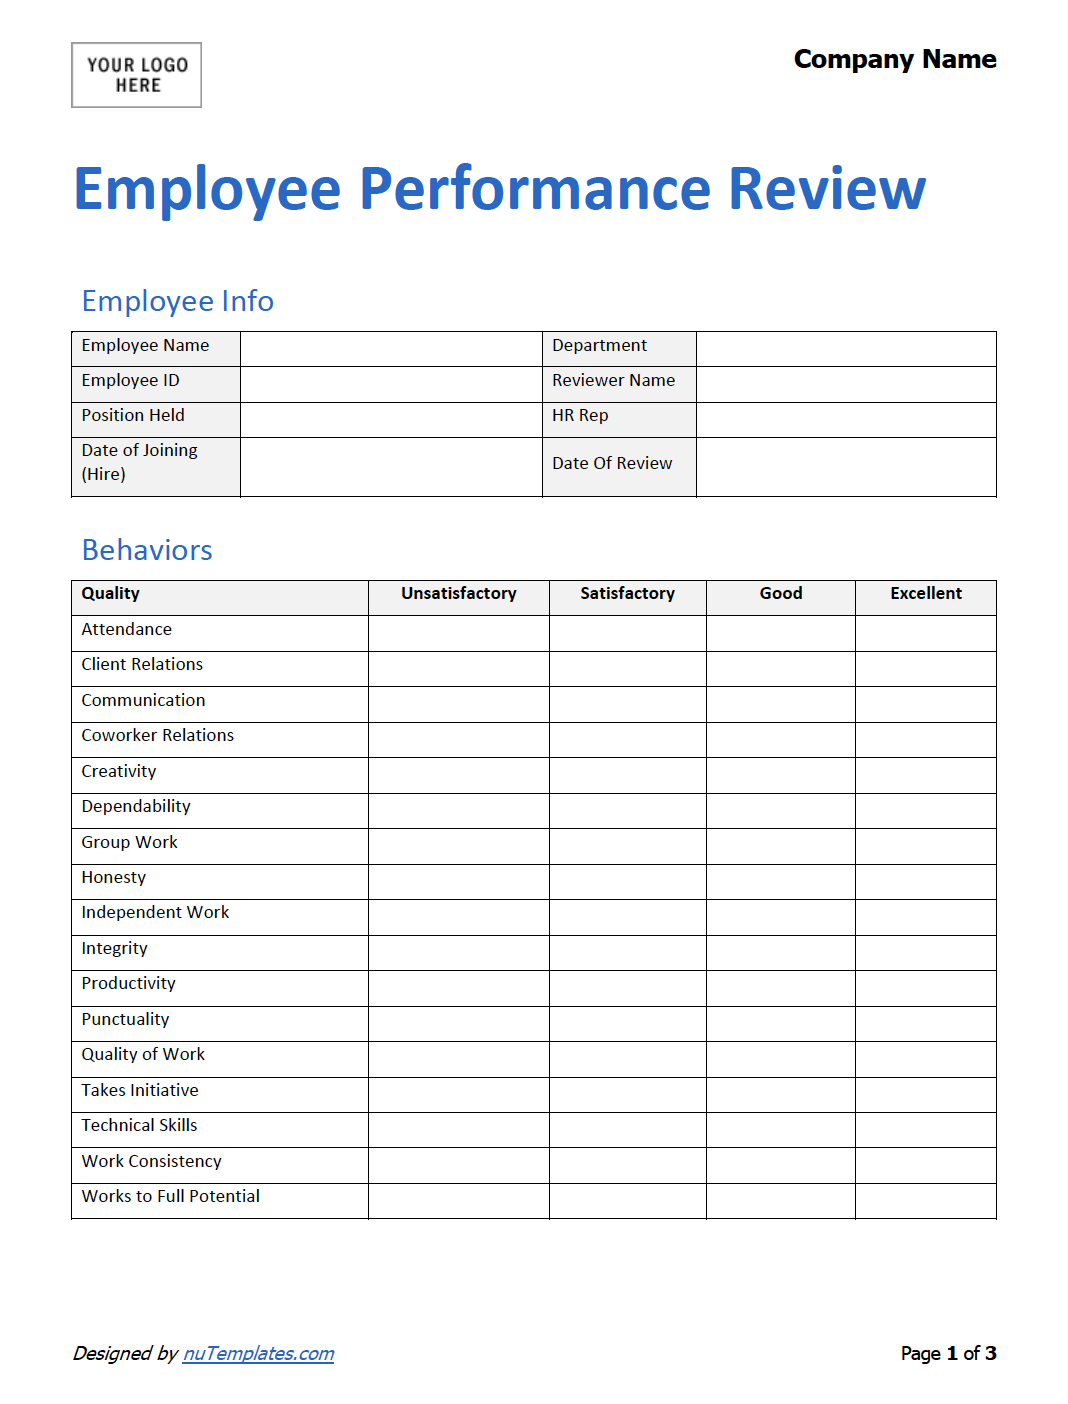 employee-performance-review-template-word-doctemplates-gambaran